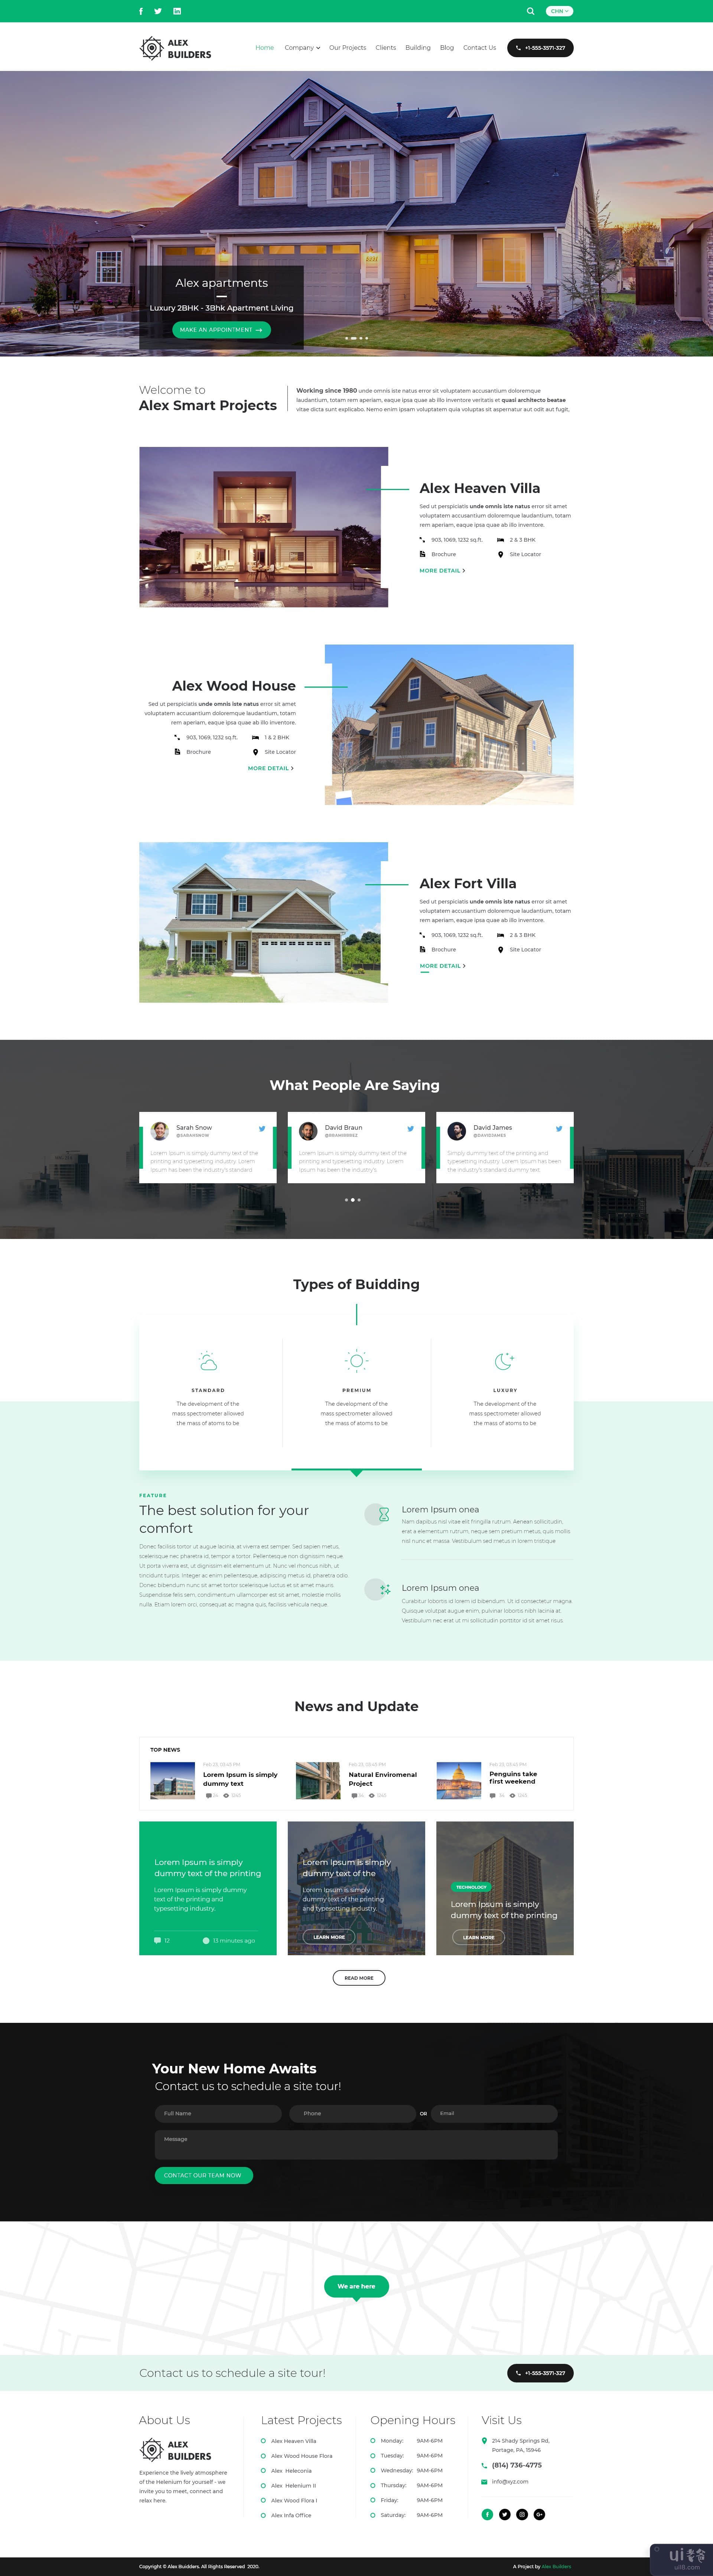 房地产登陆页面网页设计(Real Estate Landing Page Web Design)插图